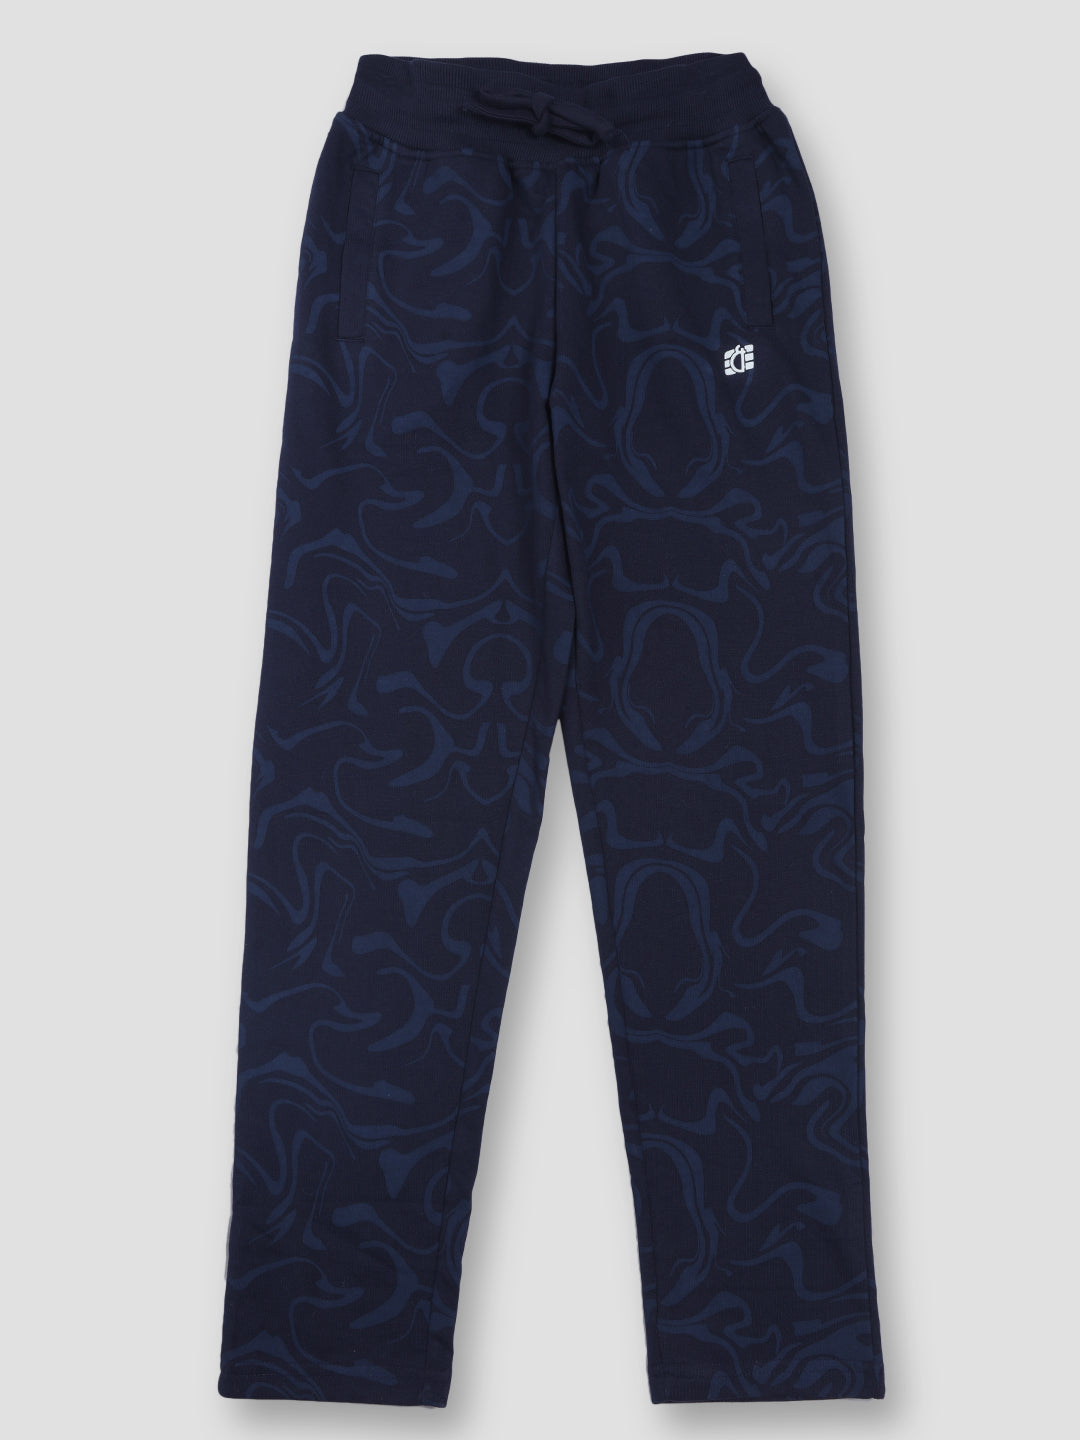 Boys Navy Blue Printed Cotton Track Pant